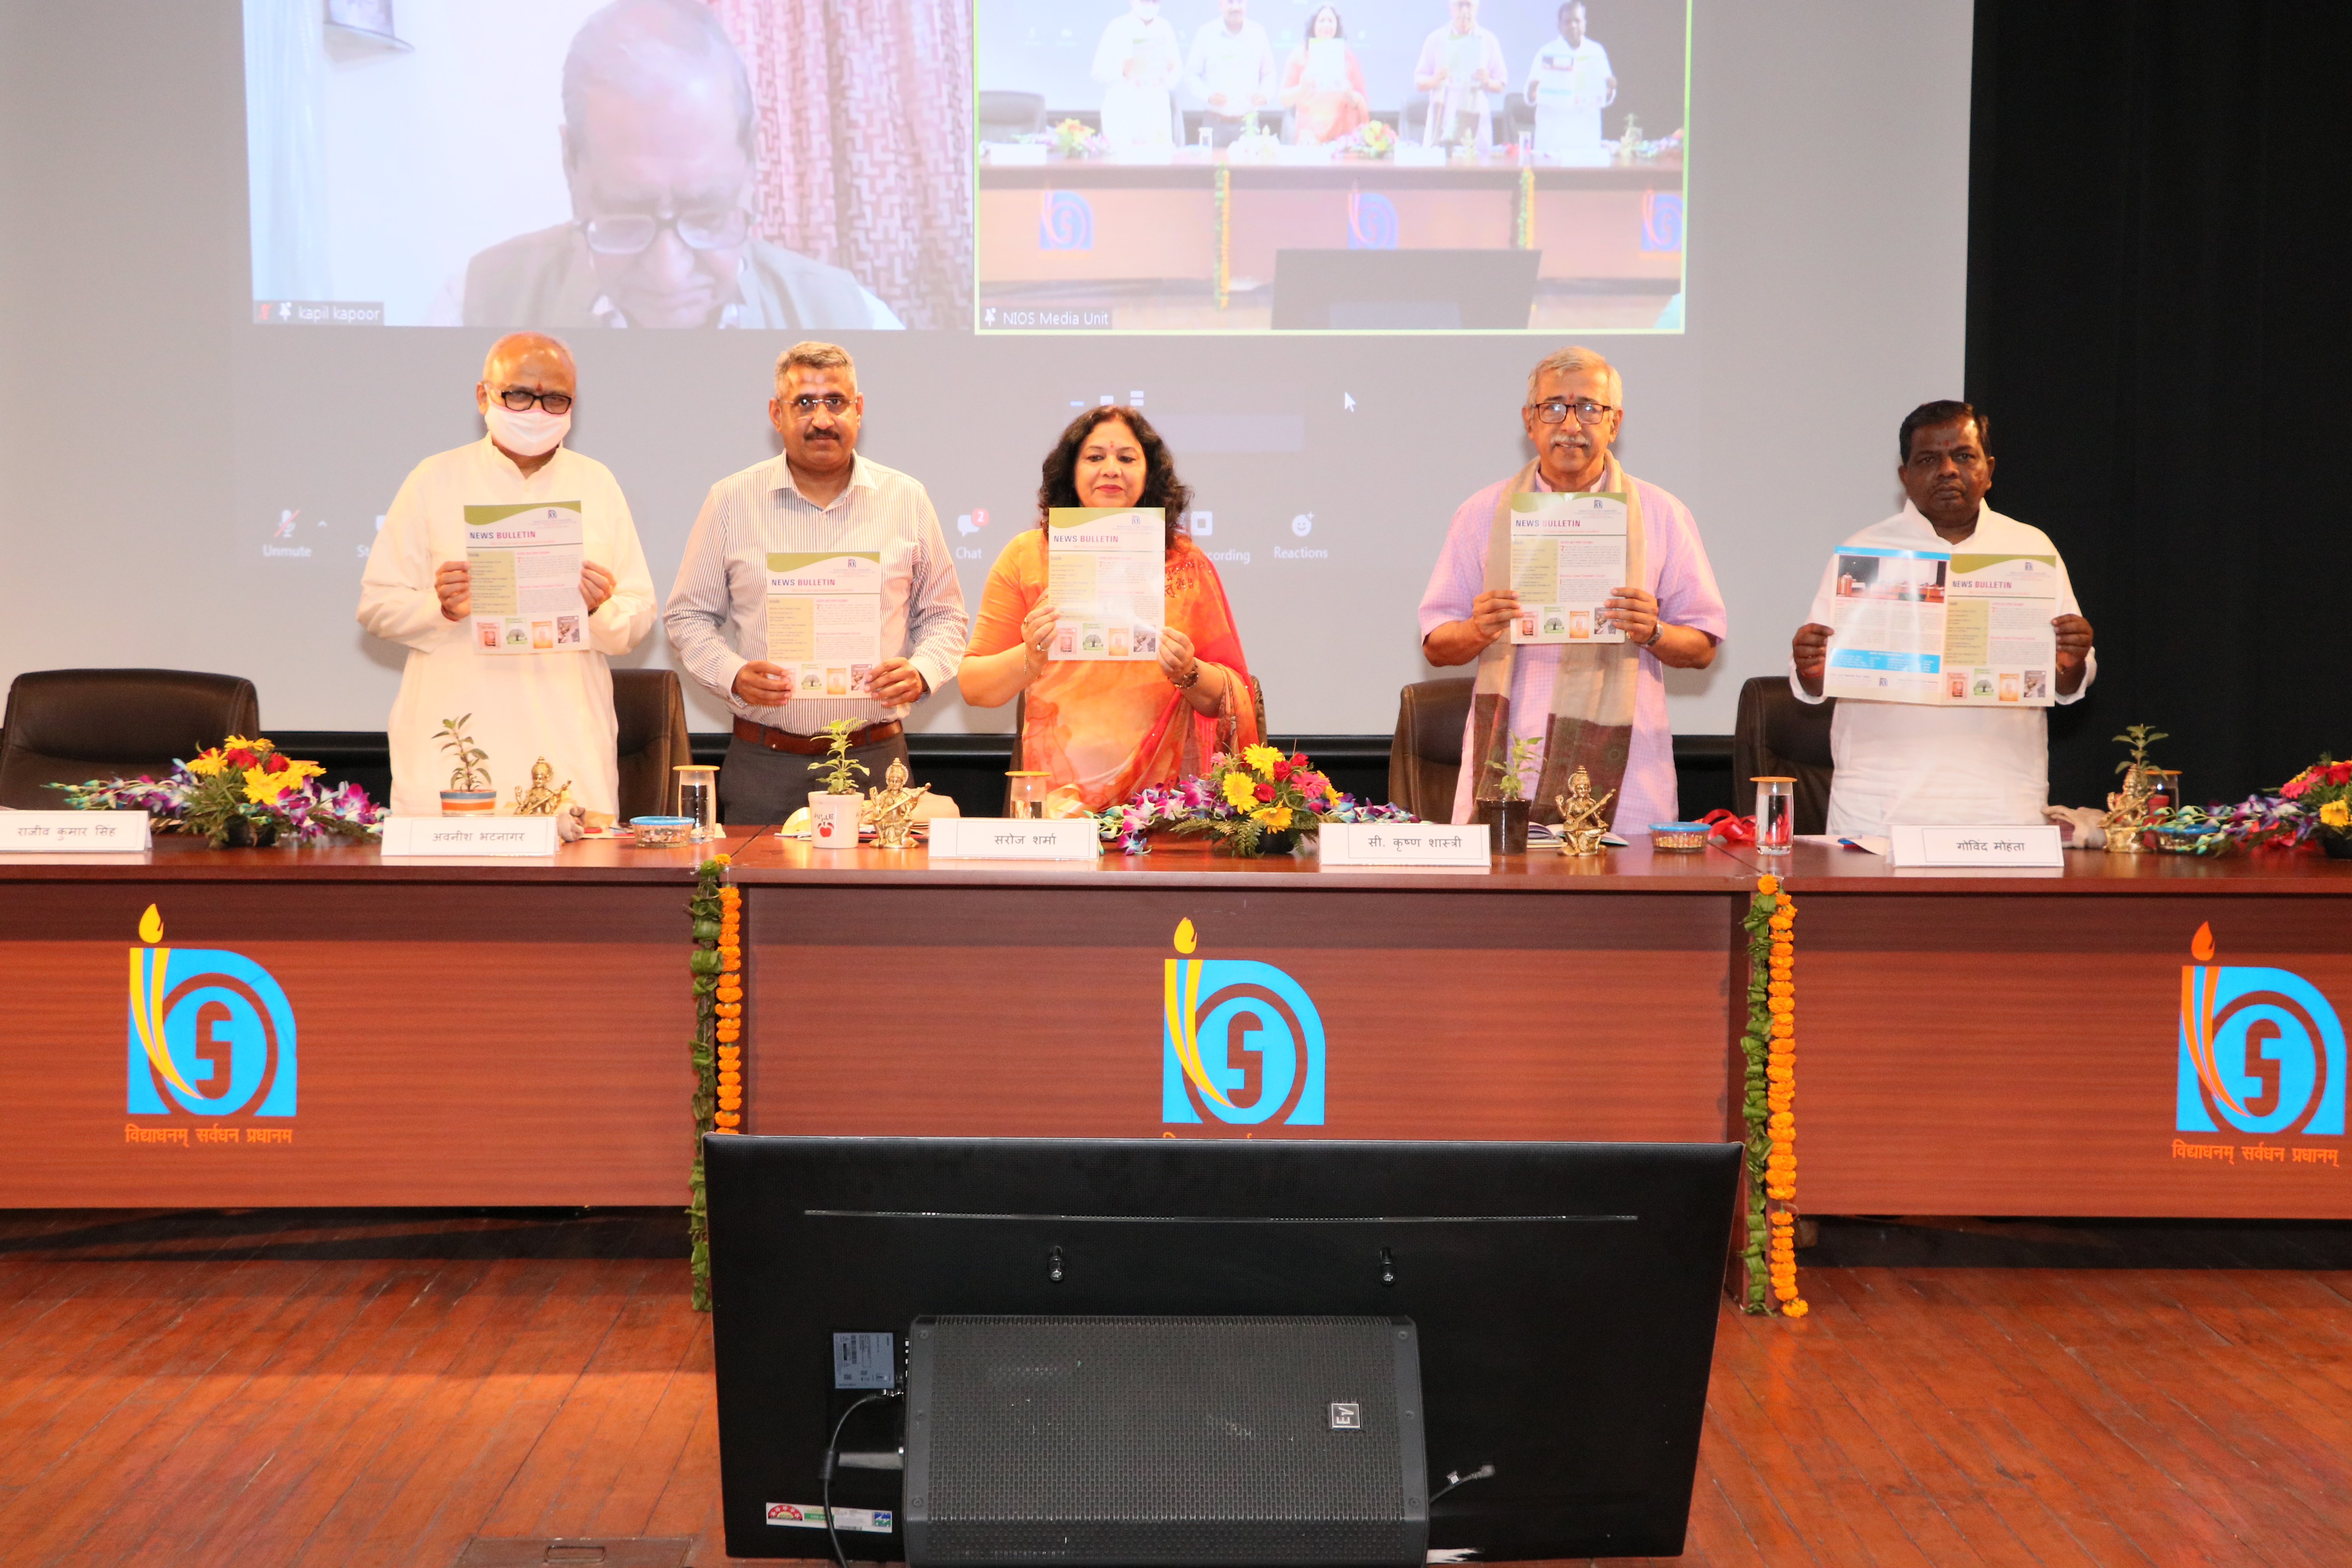 National Symposium Assimilating Indian Knowledge System